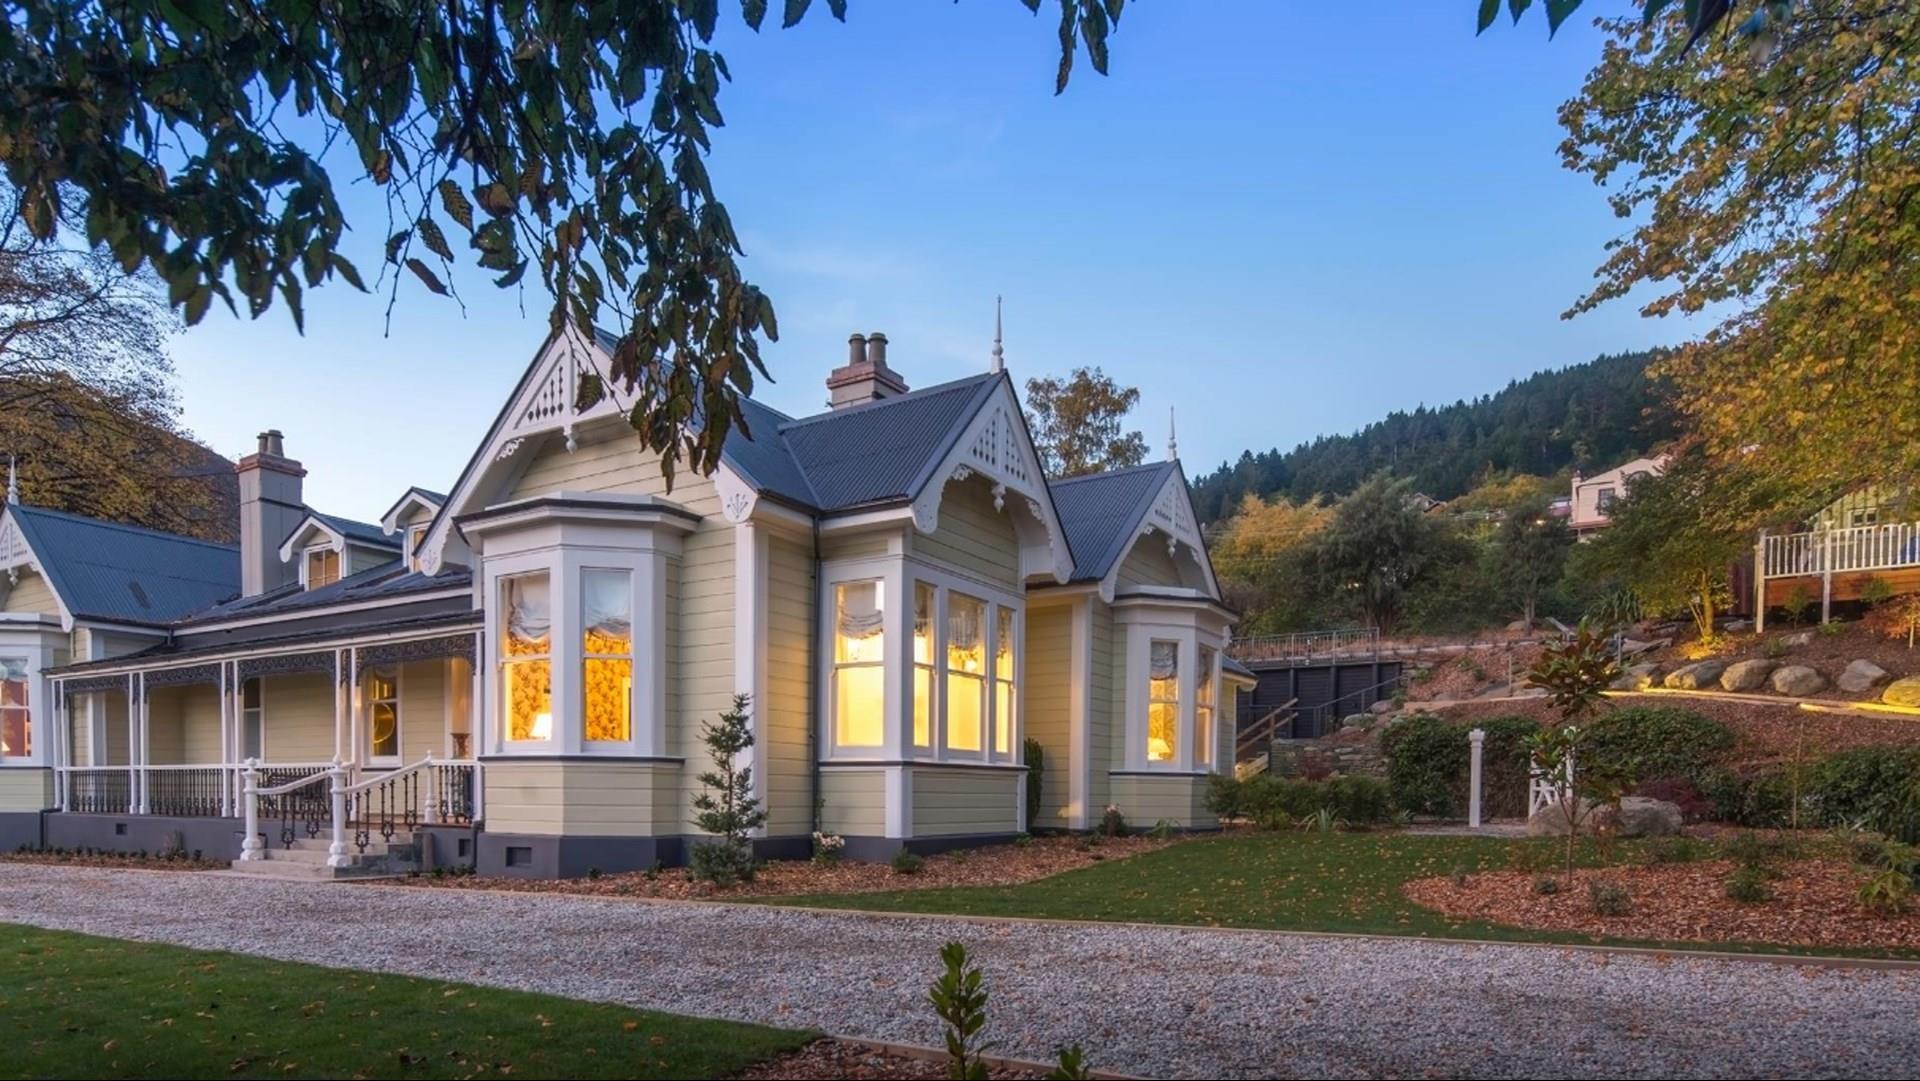 Hulbert House in Queenstown, NZ